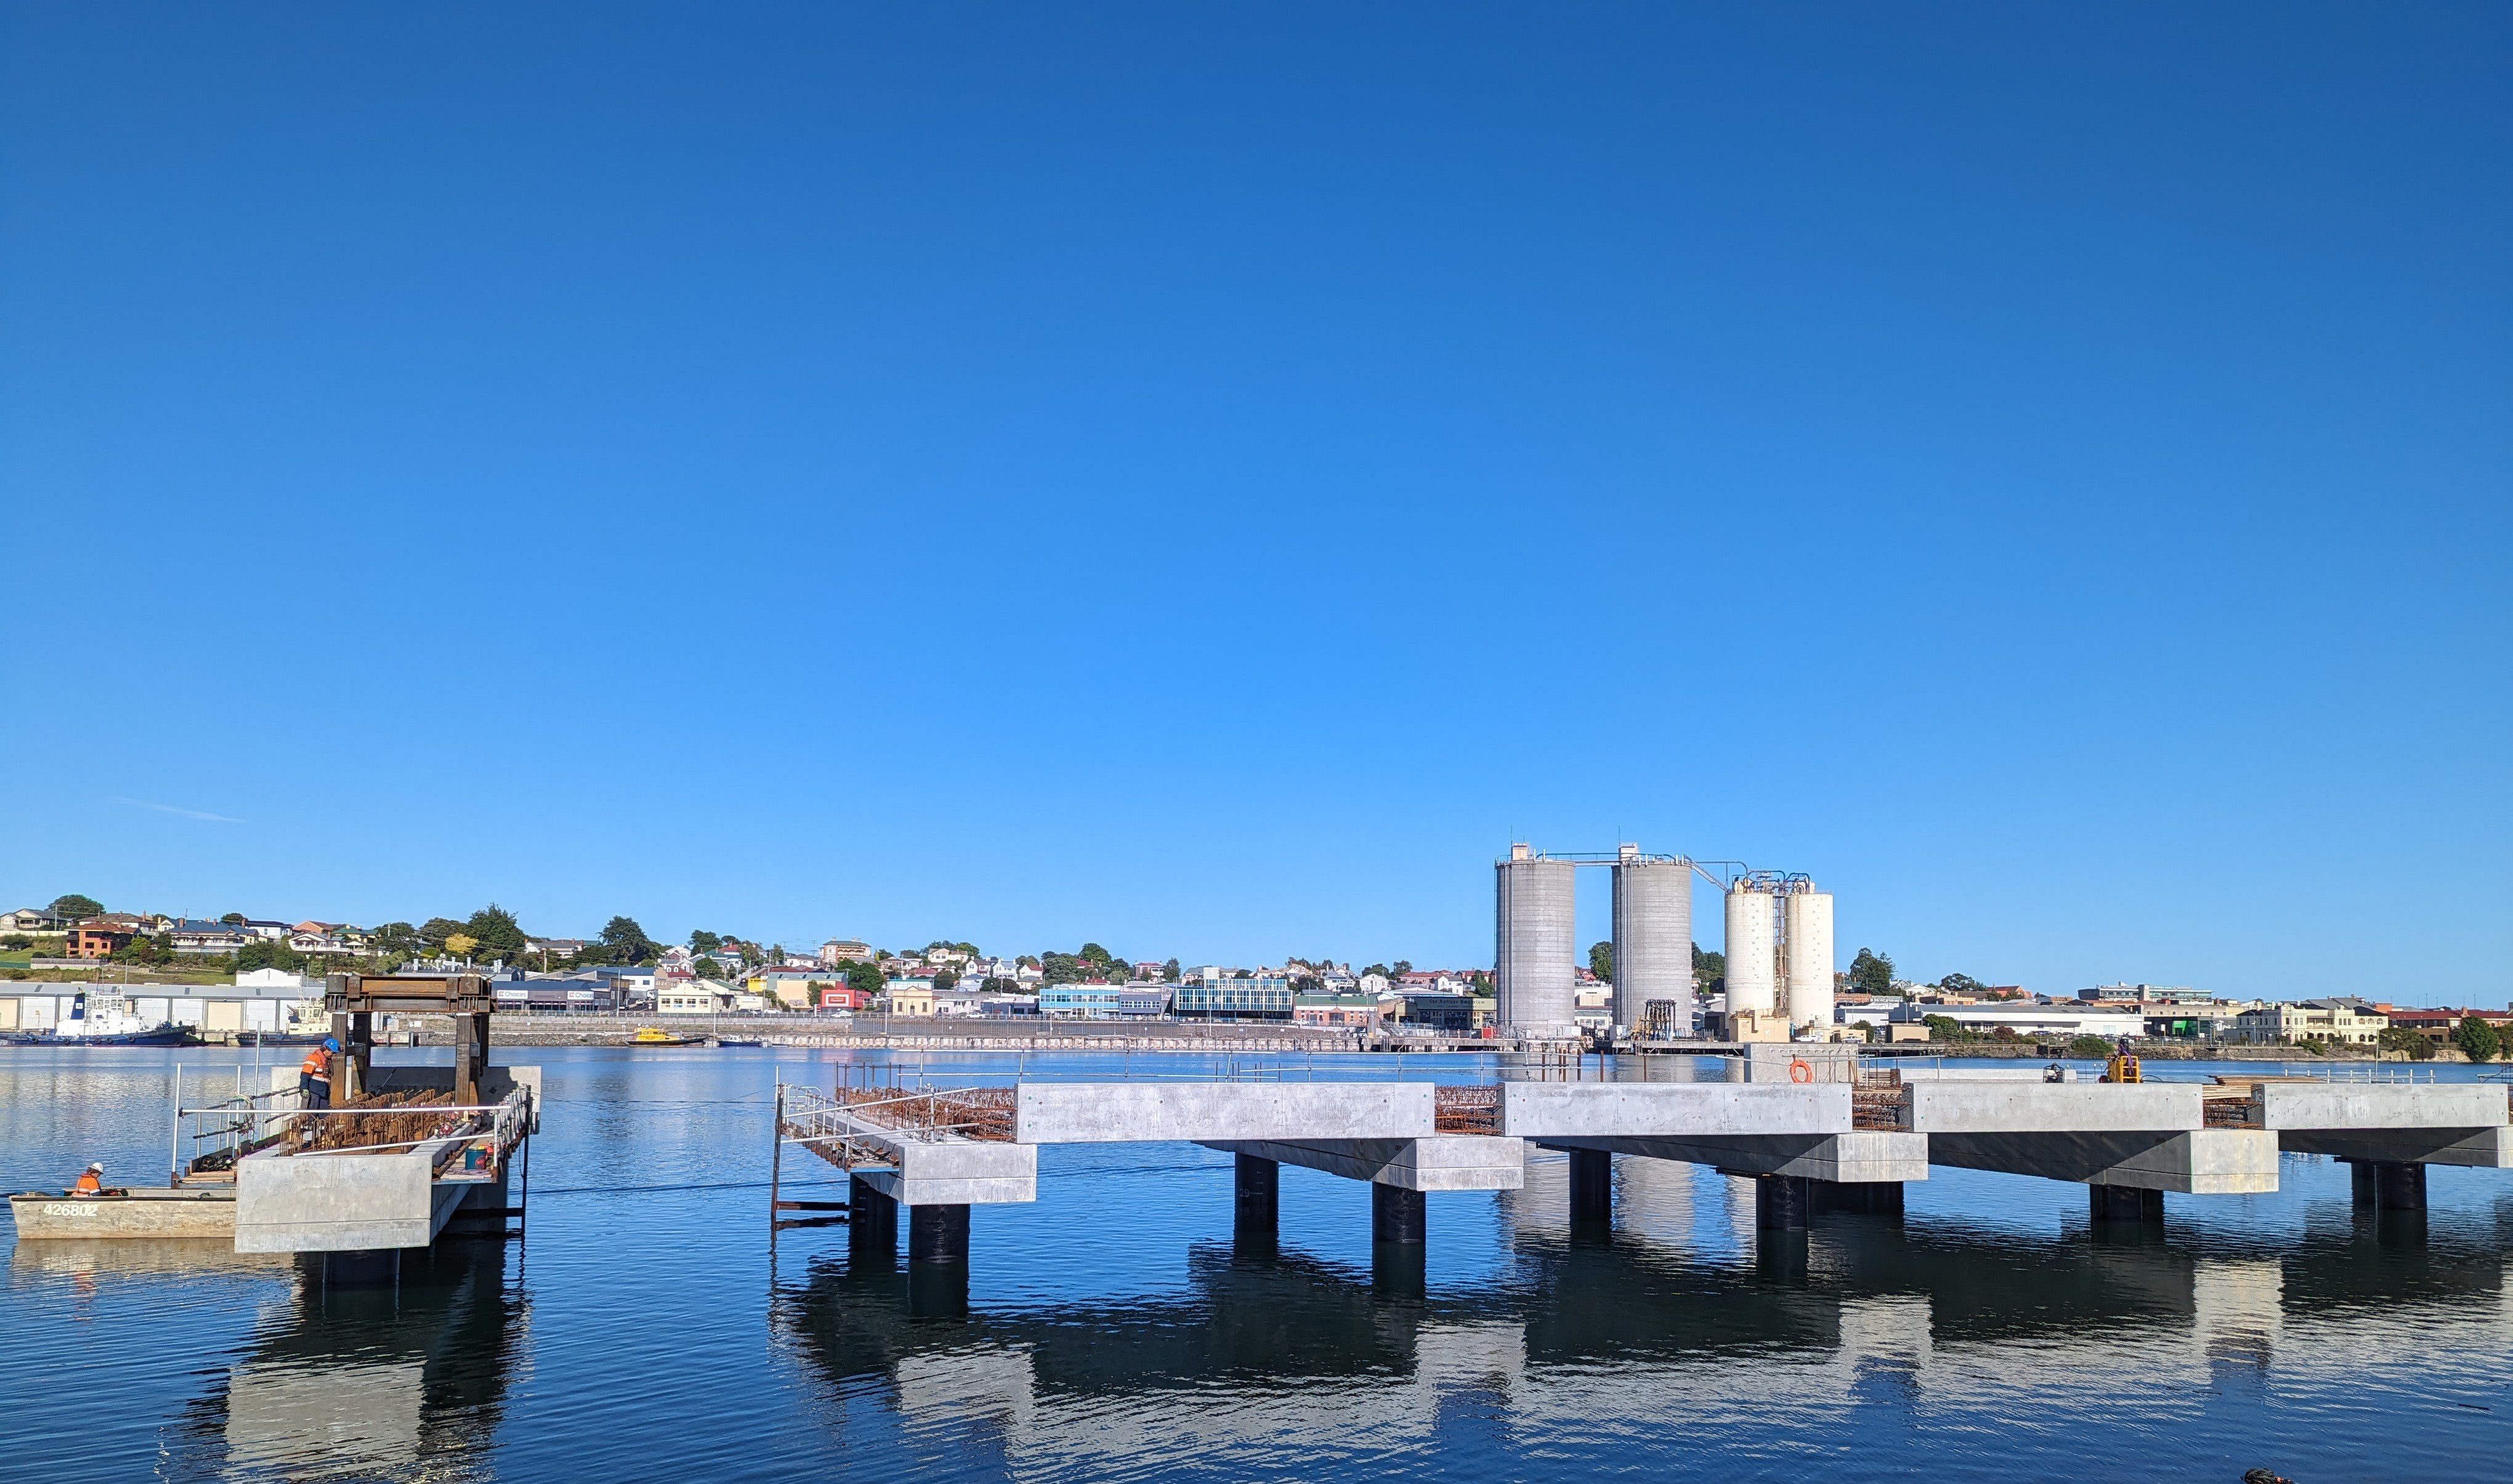 New wharf for Spirit of Tasmania